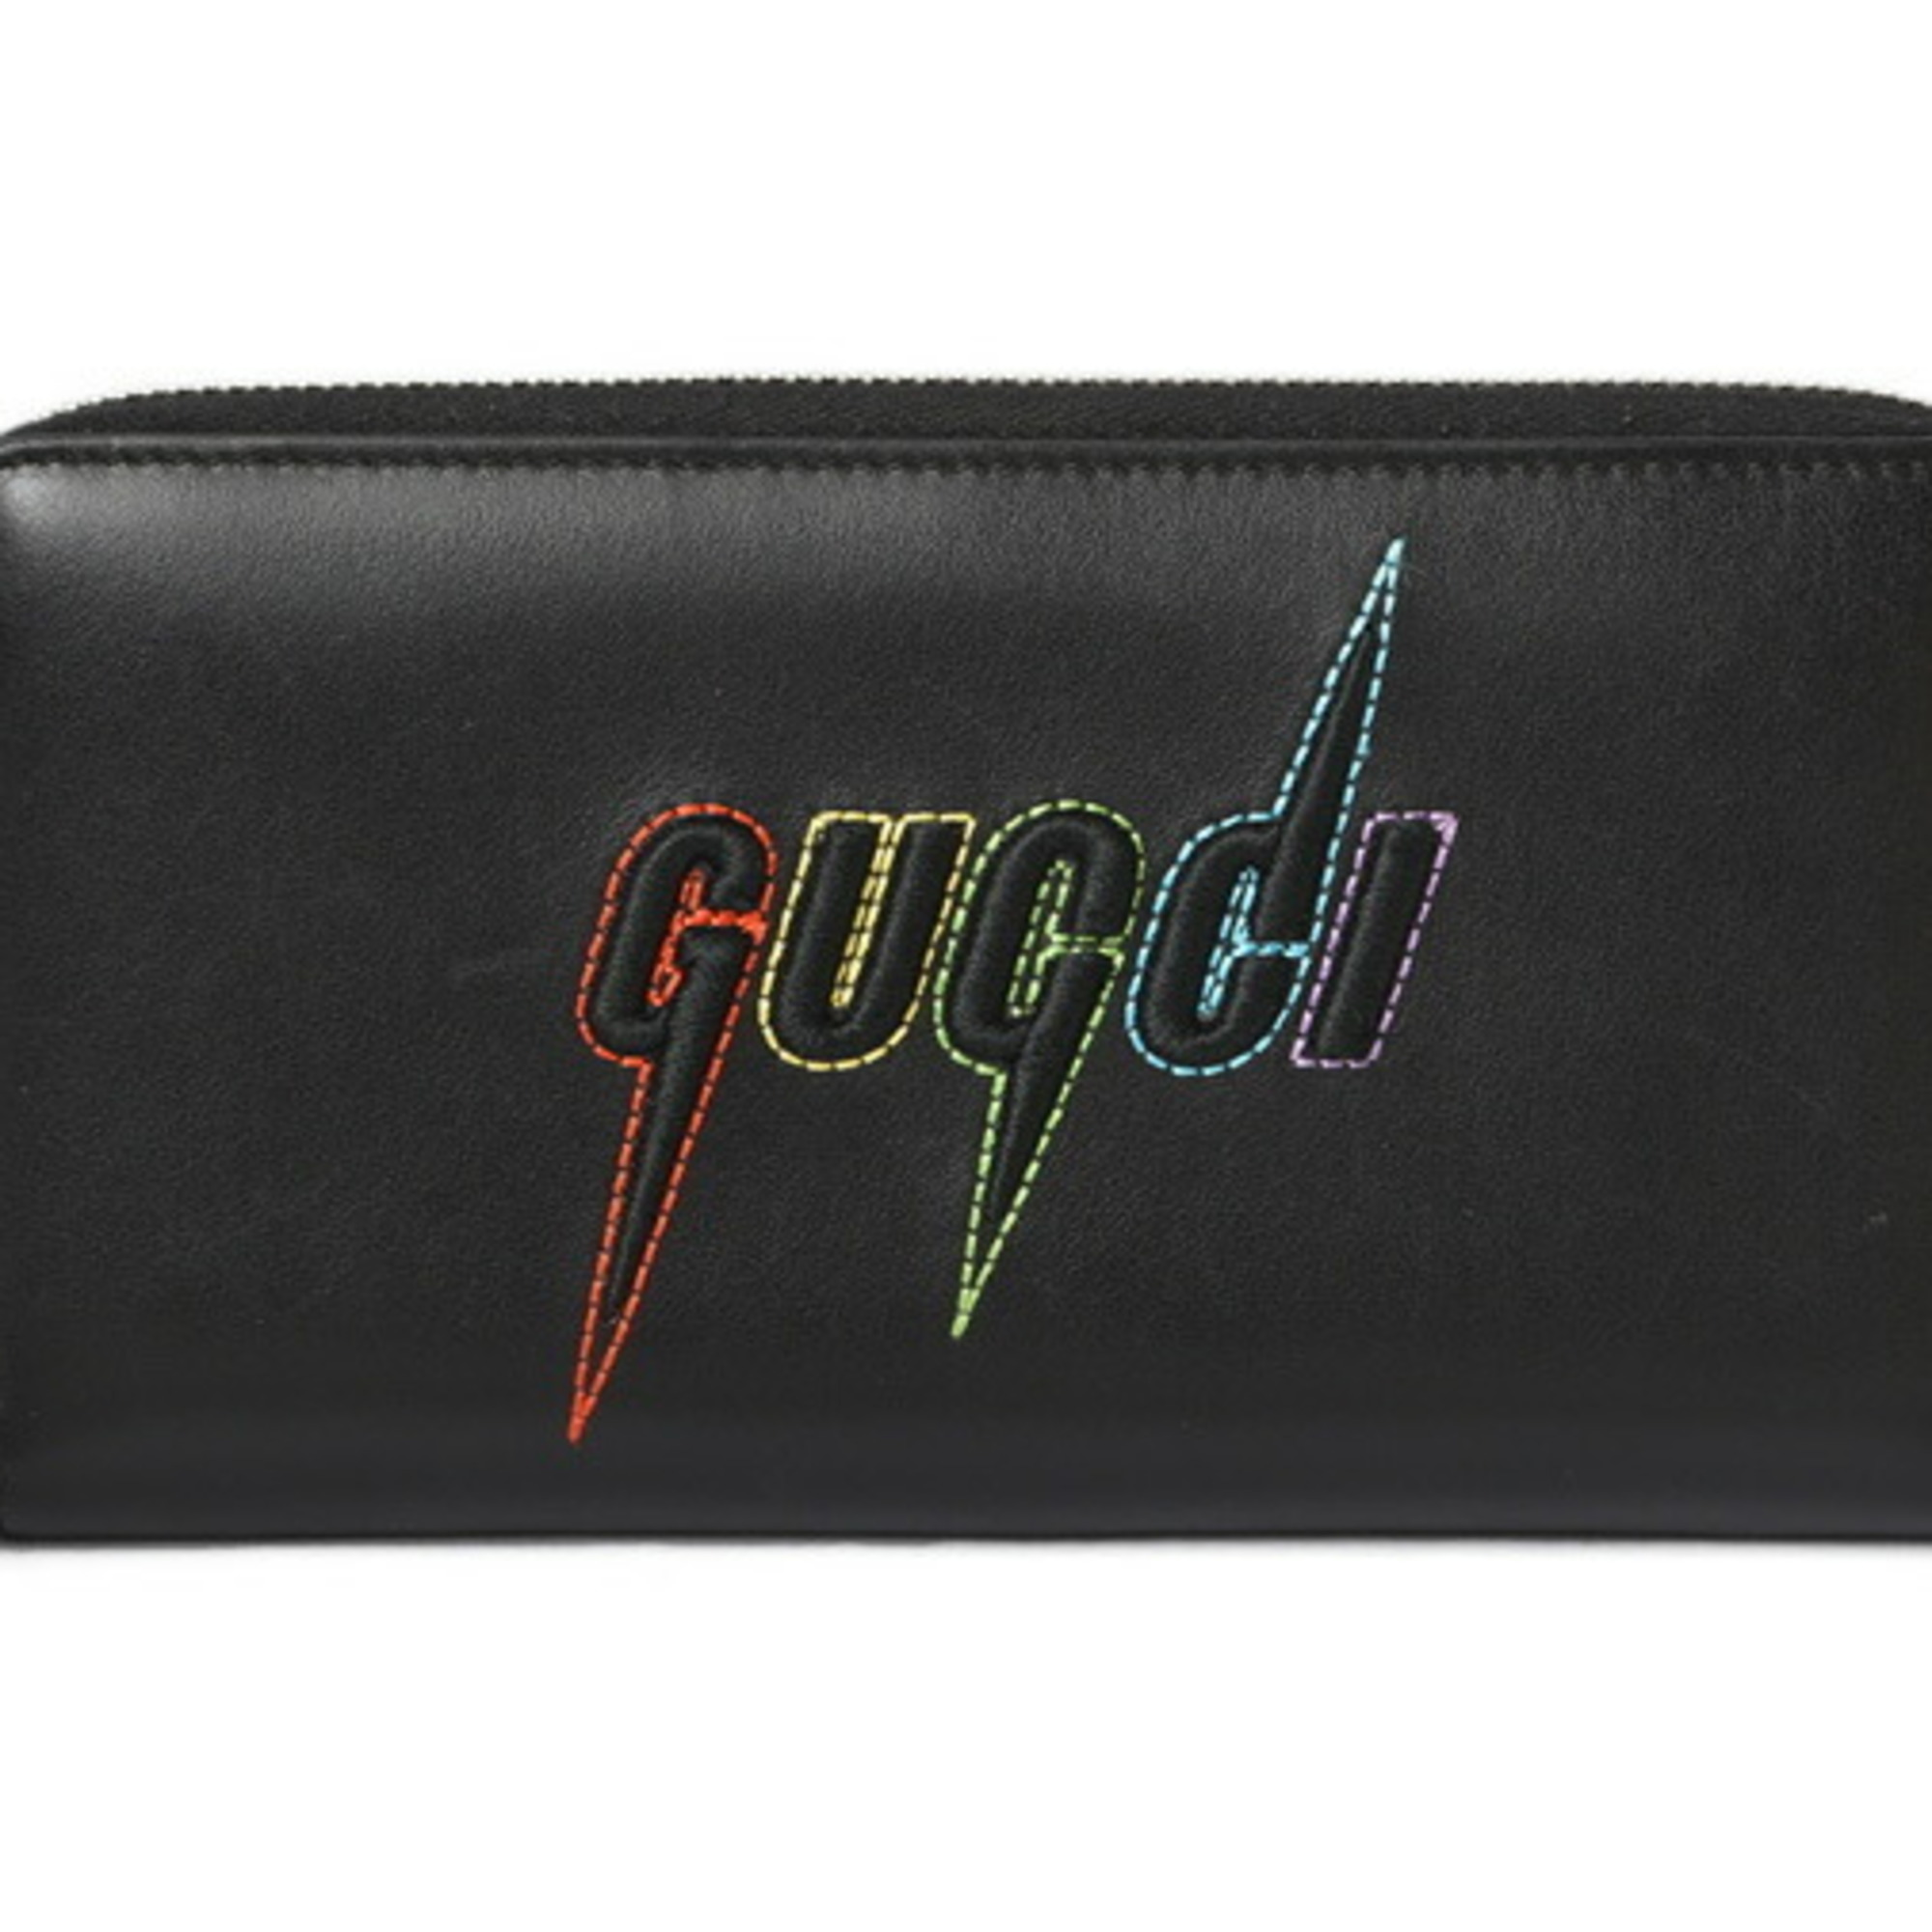 Gucci Wallet Unisex GUCCI Long Round Blade Black 597677